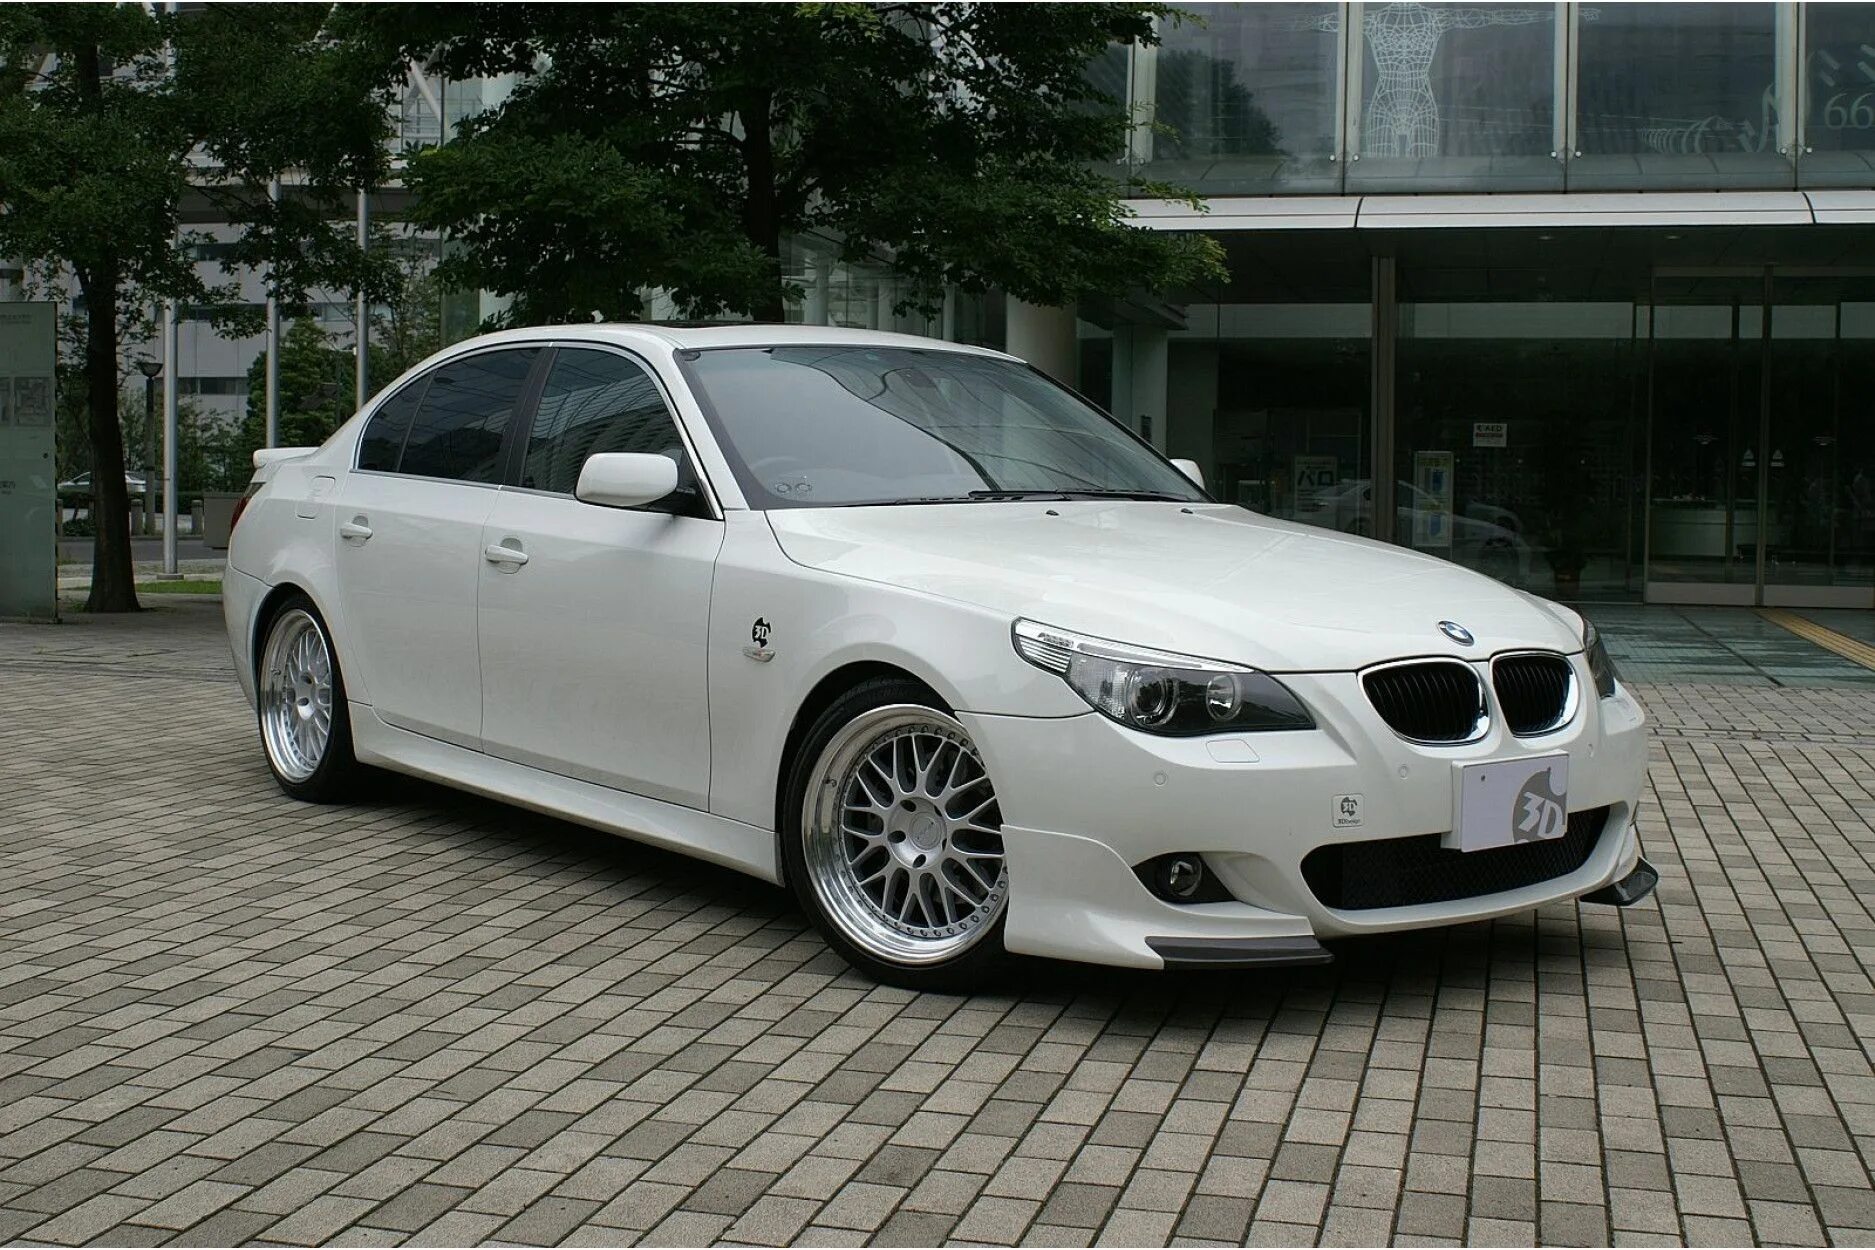 BMW 5 e60 2008. BMW 5 Series (e60). BMW m5 e60 2008. BMW 5 e60 2009. Купить бмв 2009